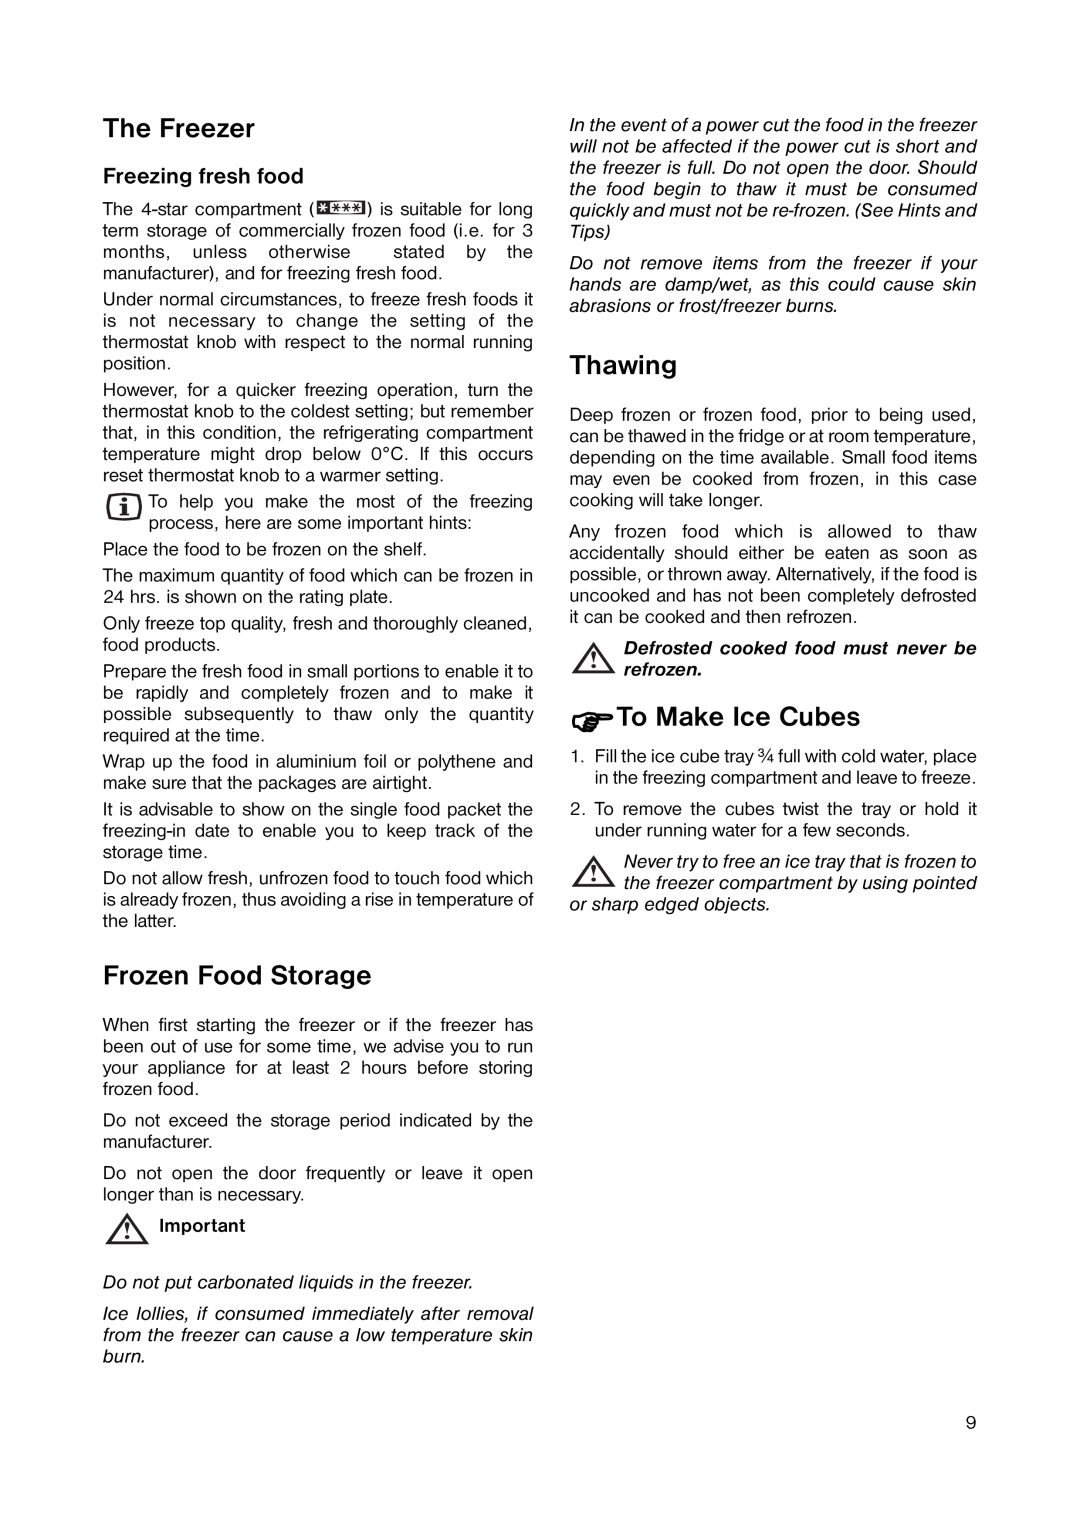 Zanussi ZRD 185W1 manual The Freezer, Frozen Food Storage, Thawing, To Make Ice Cubes, Freezing fresh food 